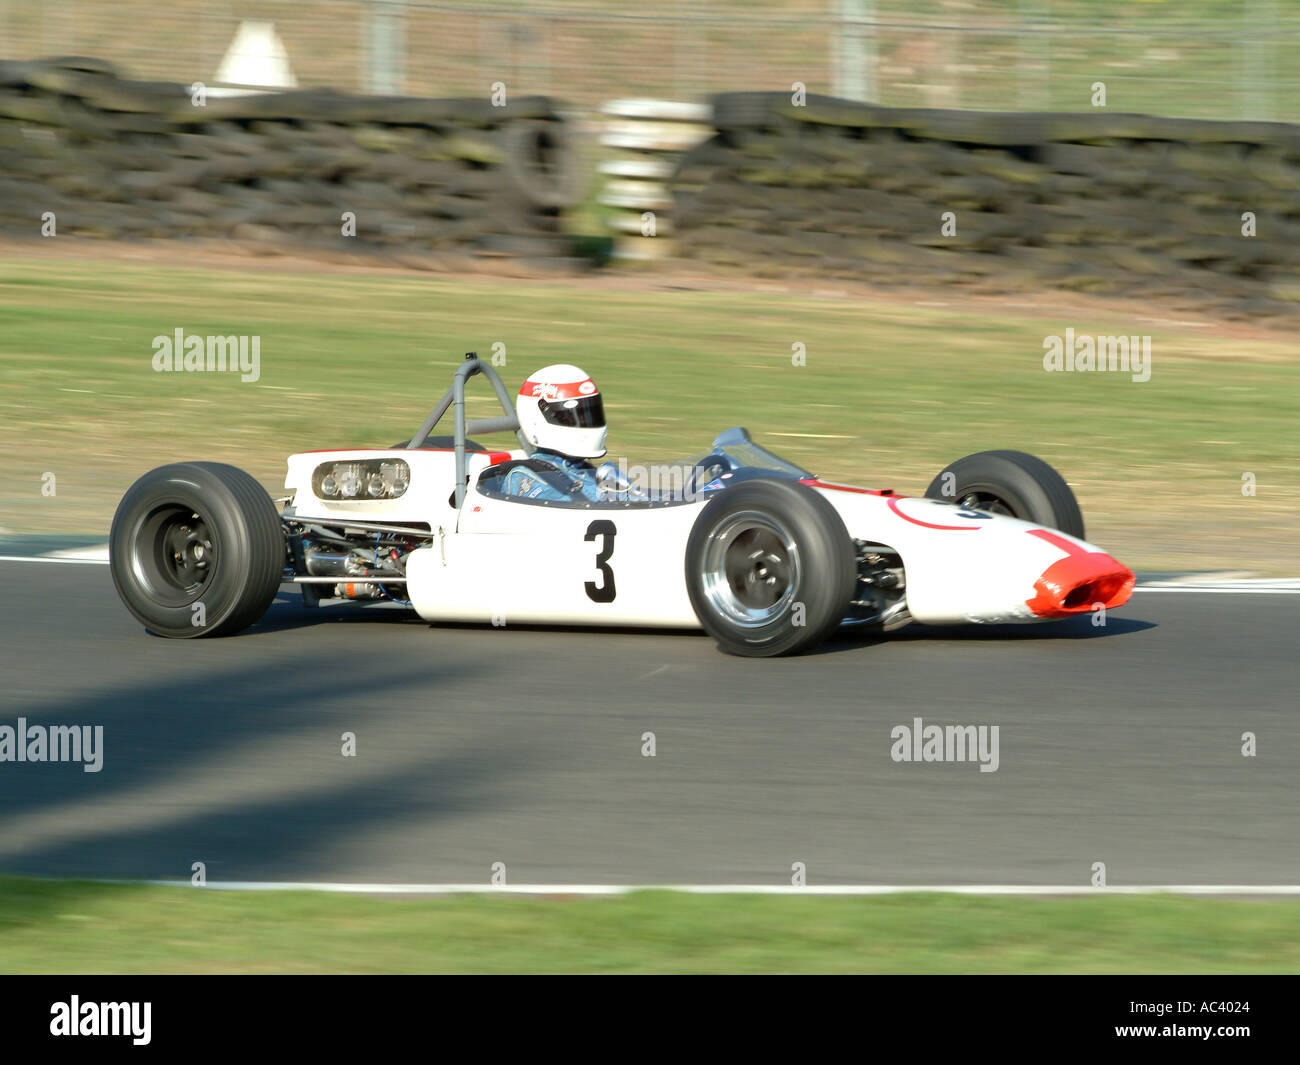 Vintage Brabham Racing BT41 Car Press Photo Photograph Lot of 3